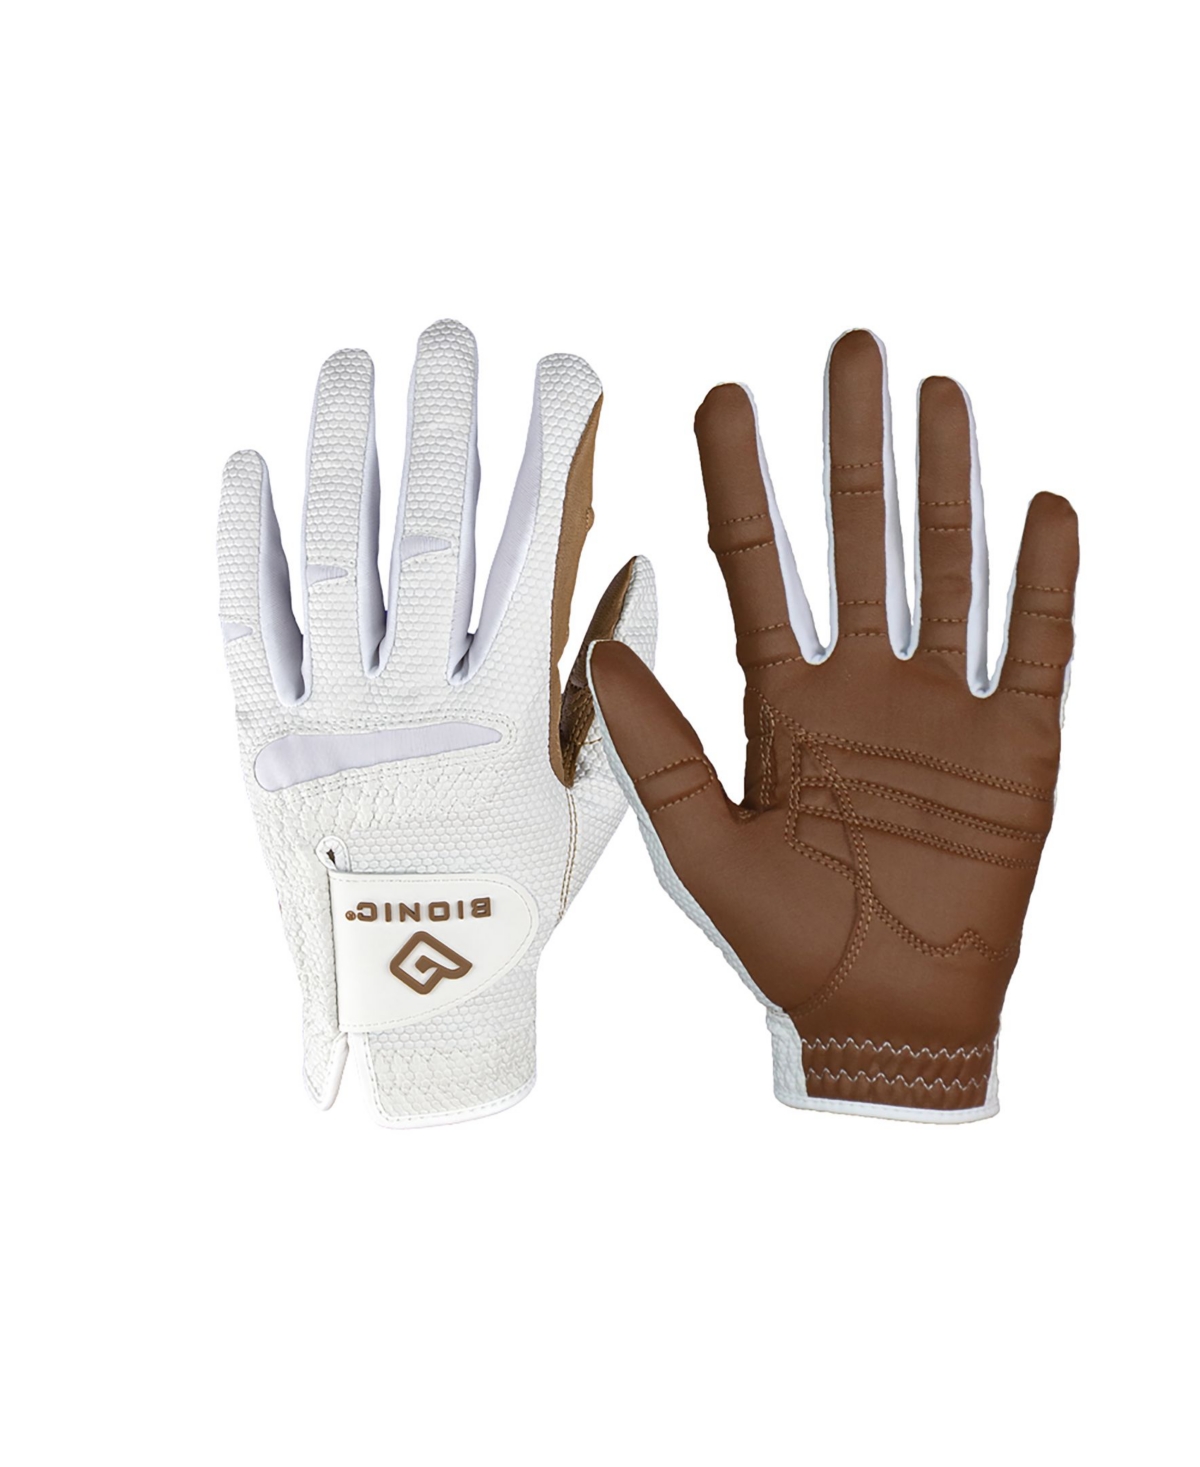 Save 30% on Women's Relax Grip 2.0 Golf Glove - Left Hand